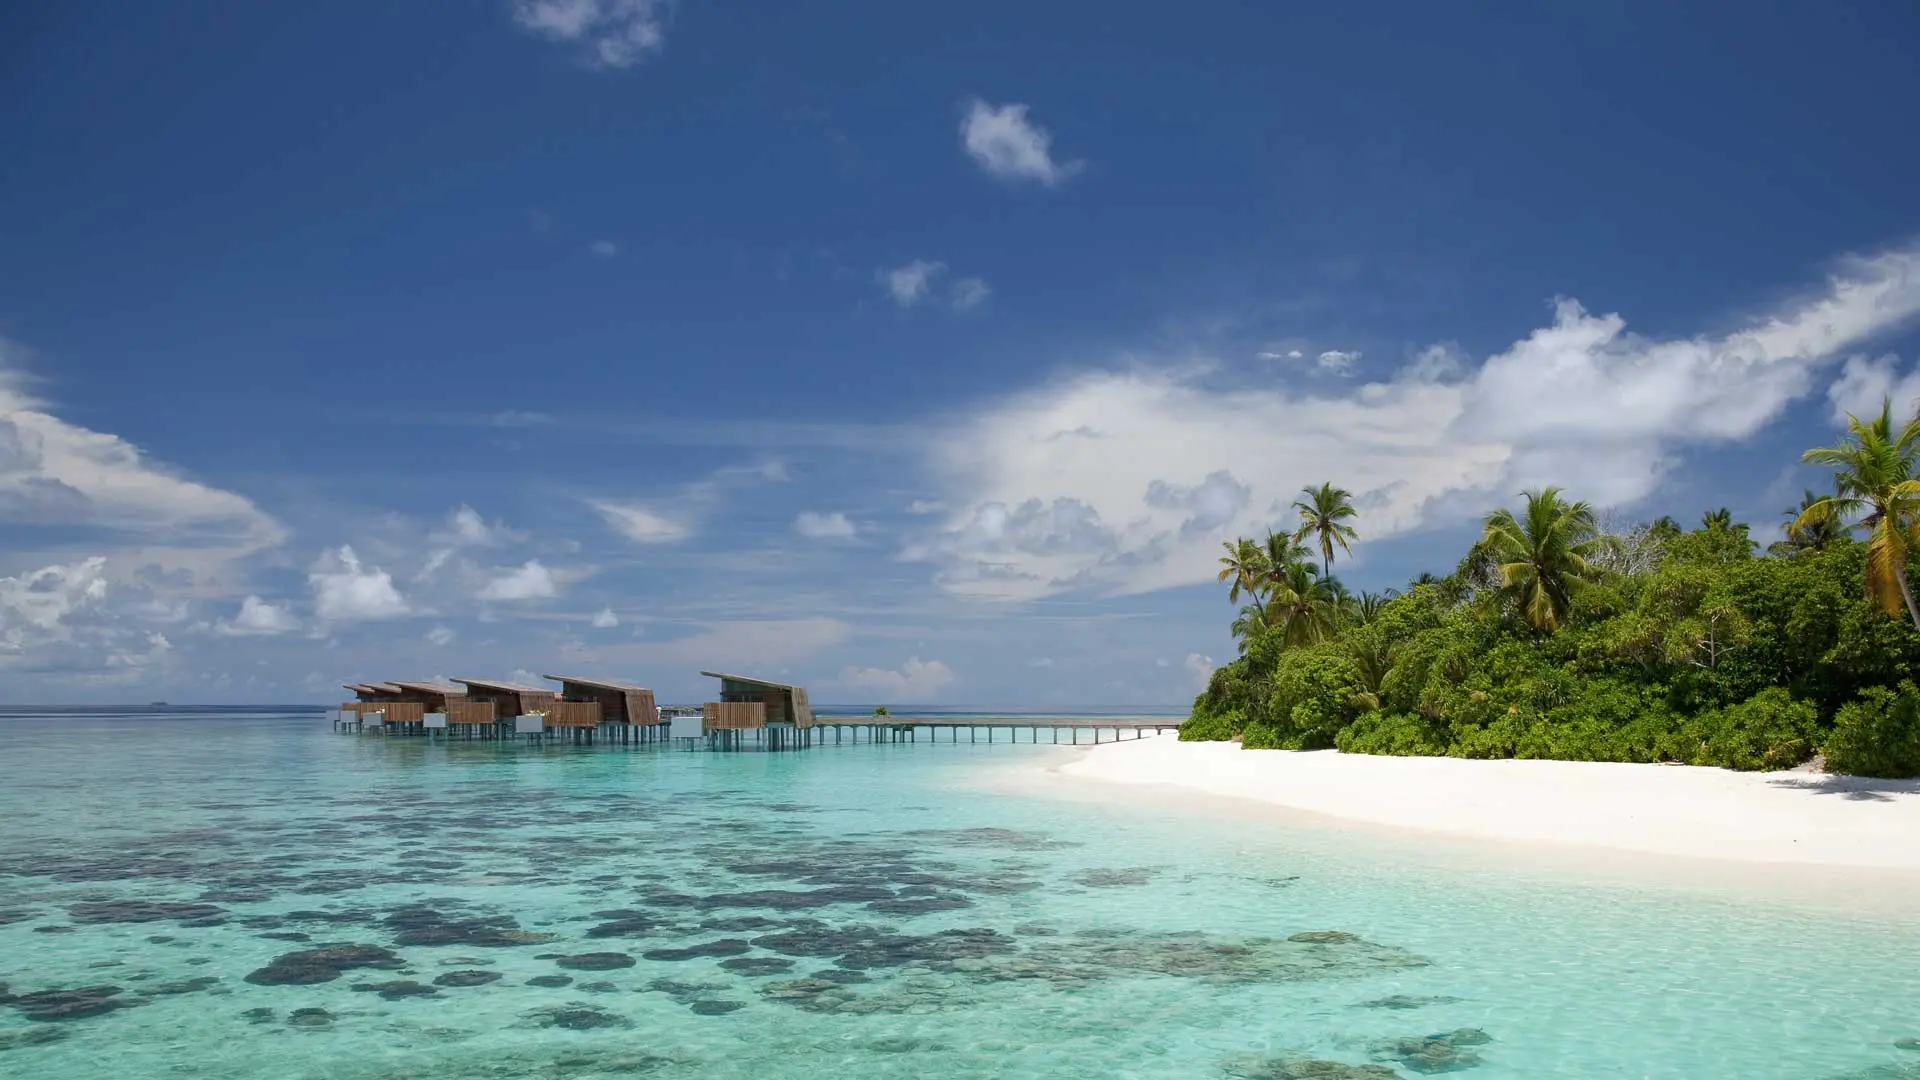 Hotel review Location' - Park Hyatt Maldives Hadahaa - 4